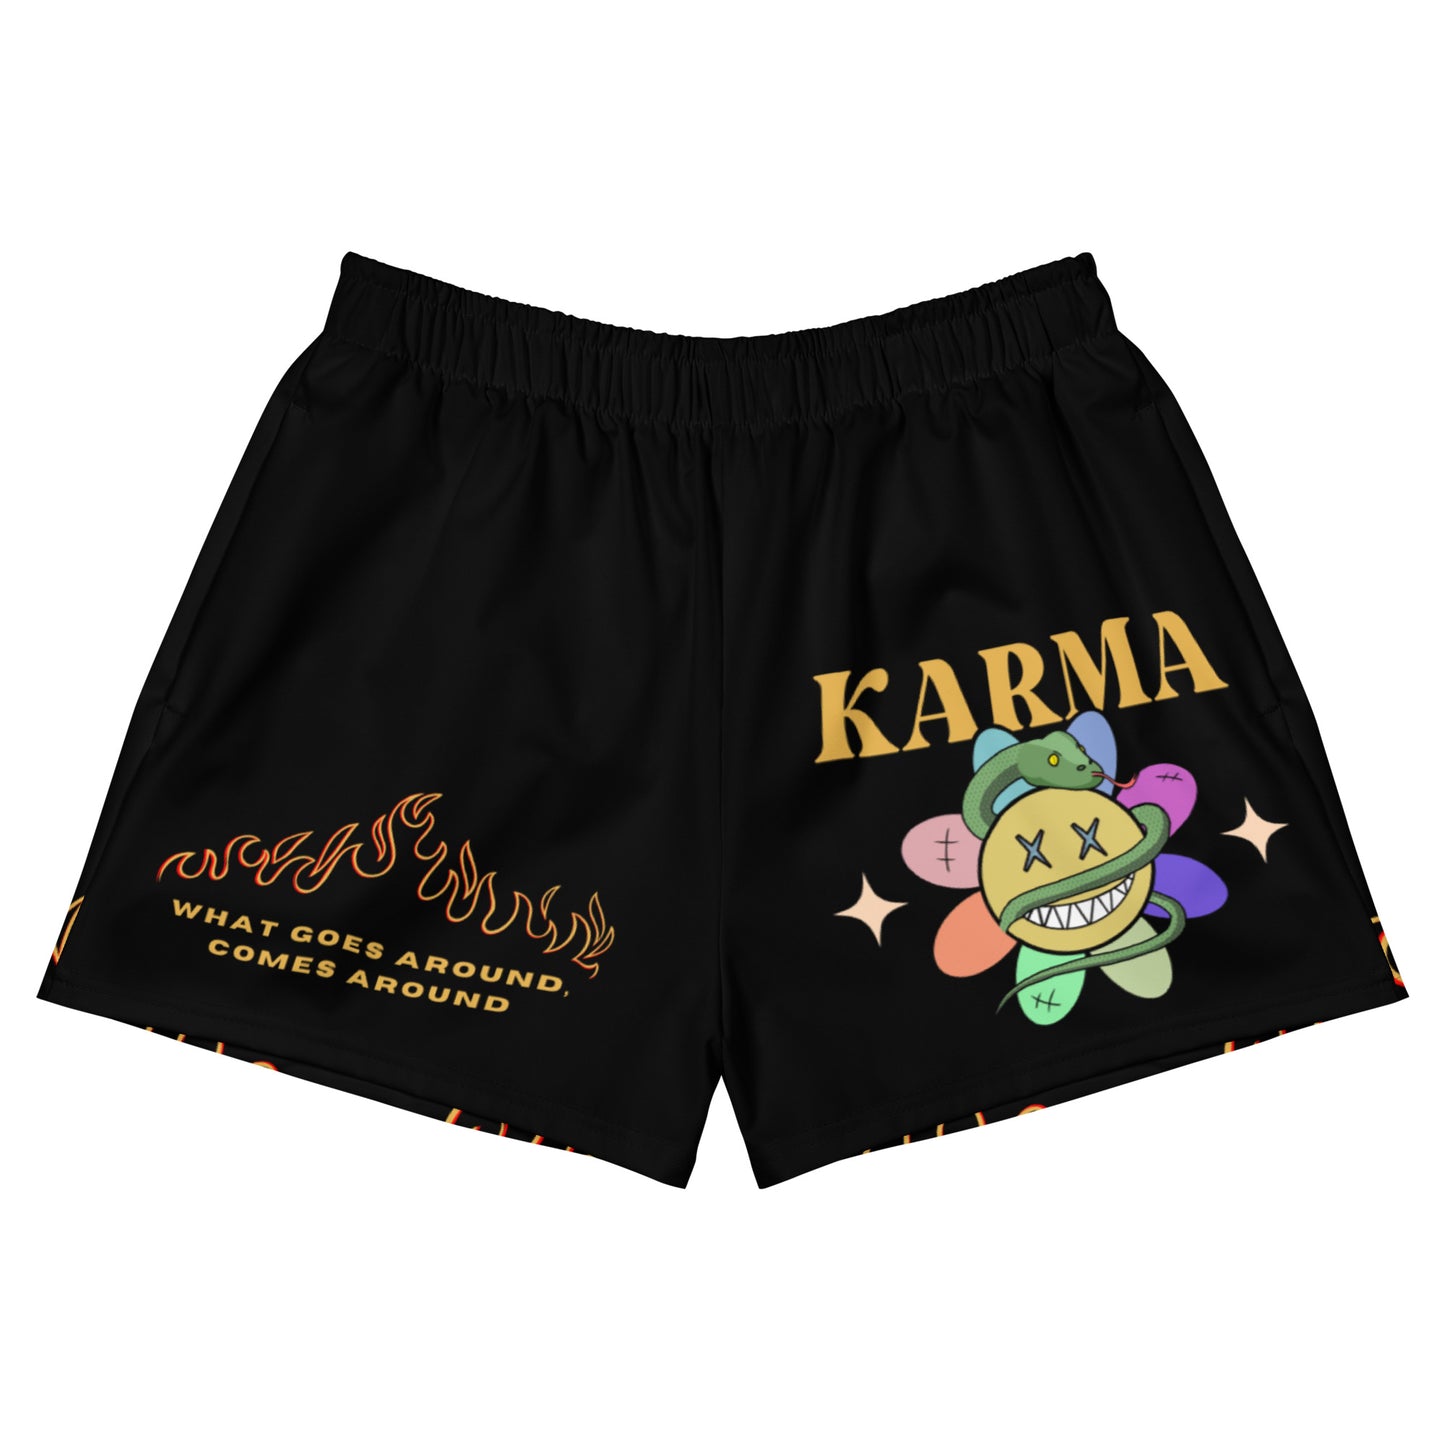 Karma - Women’s Recycled Shorts